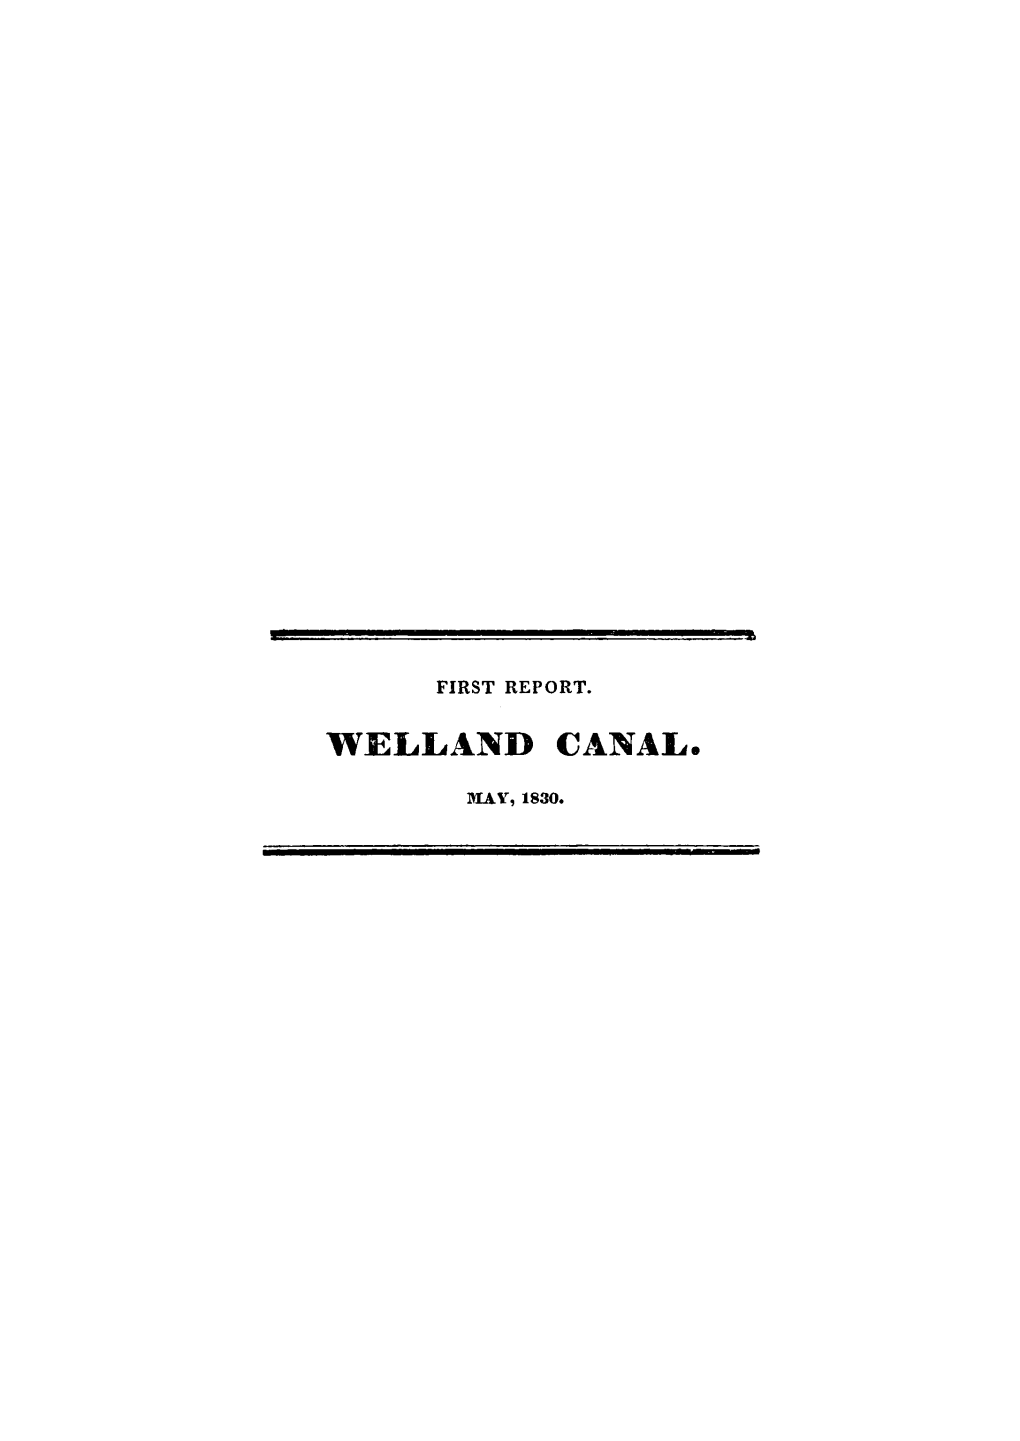 Welland Canal